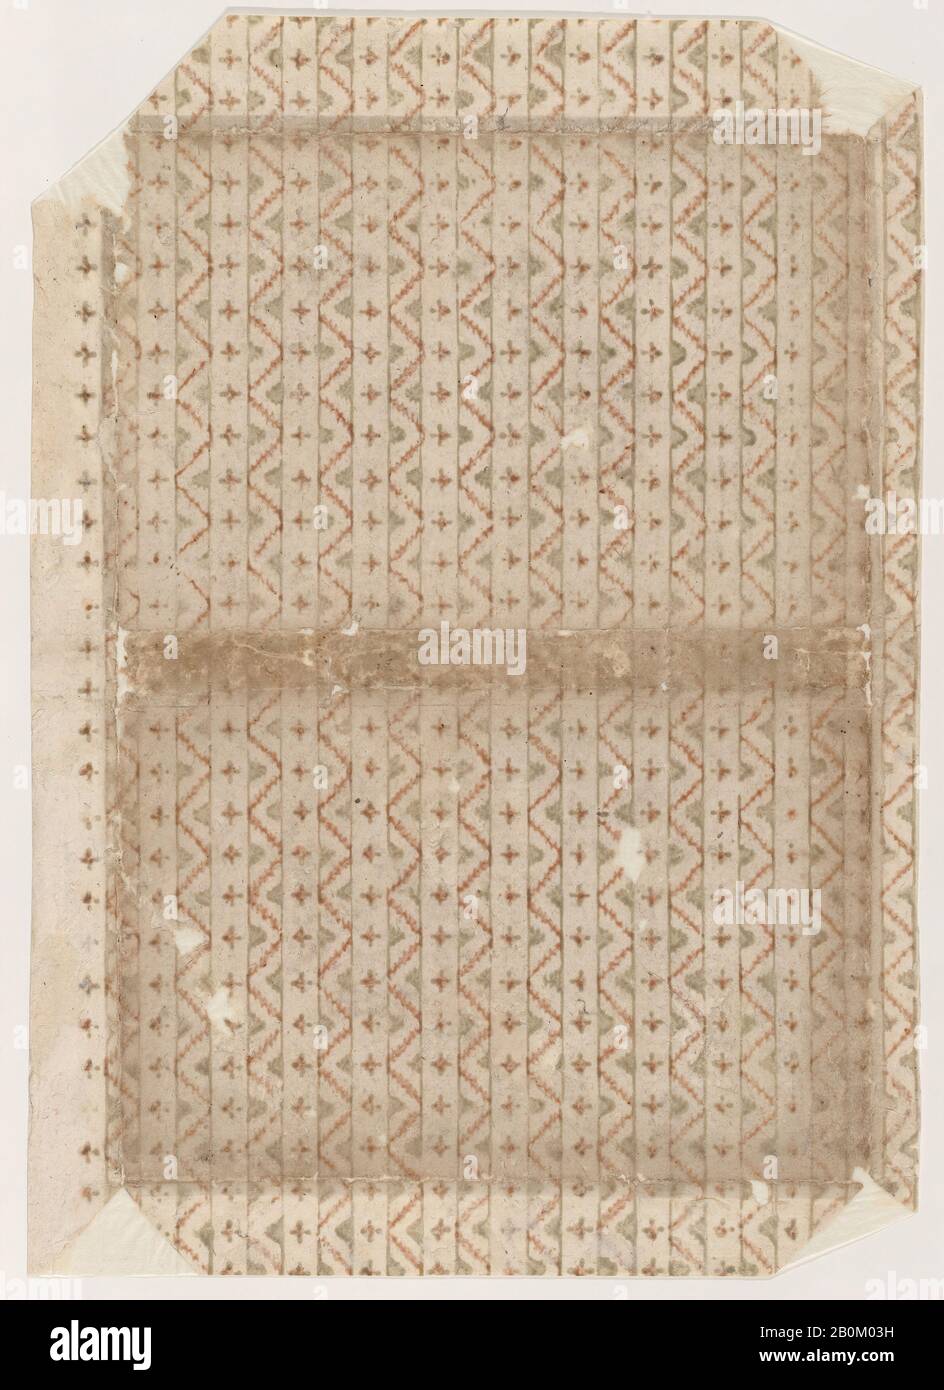 Anonym, Bucheinband mit Zickzackmuster, anonym, 19. Jahrhundert, 19. Jahrhundert, Reliefdruck (Holz oder Metall), Blatt: 9 3/16 Zoll × 13 Zoll (23,4 × 33 cm), Ausdrucke Stockfoto